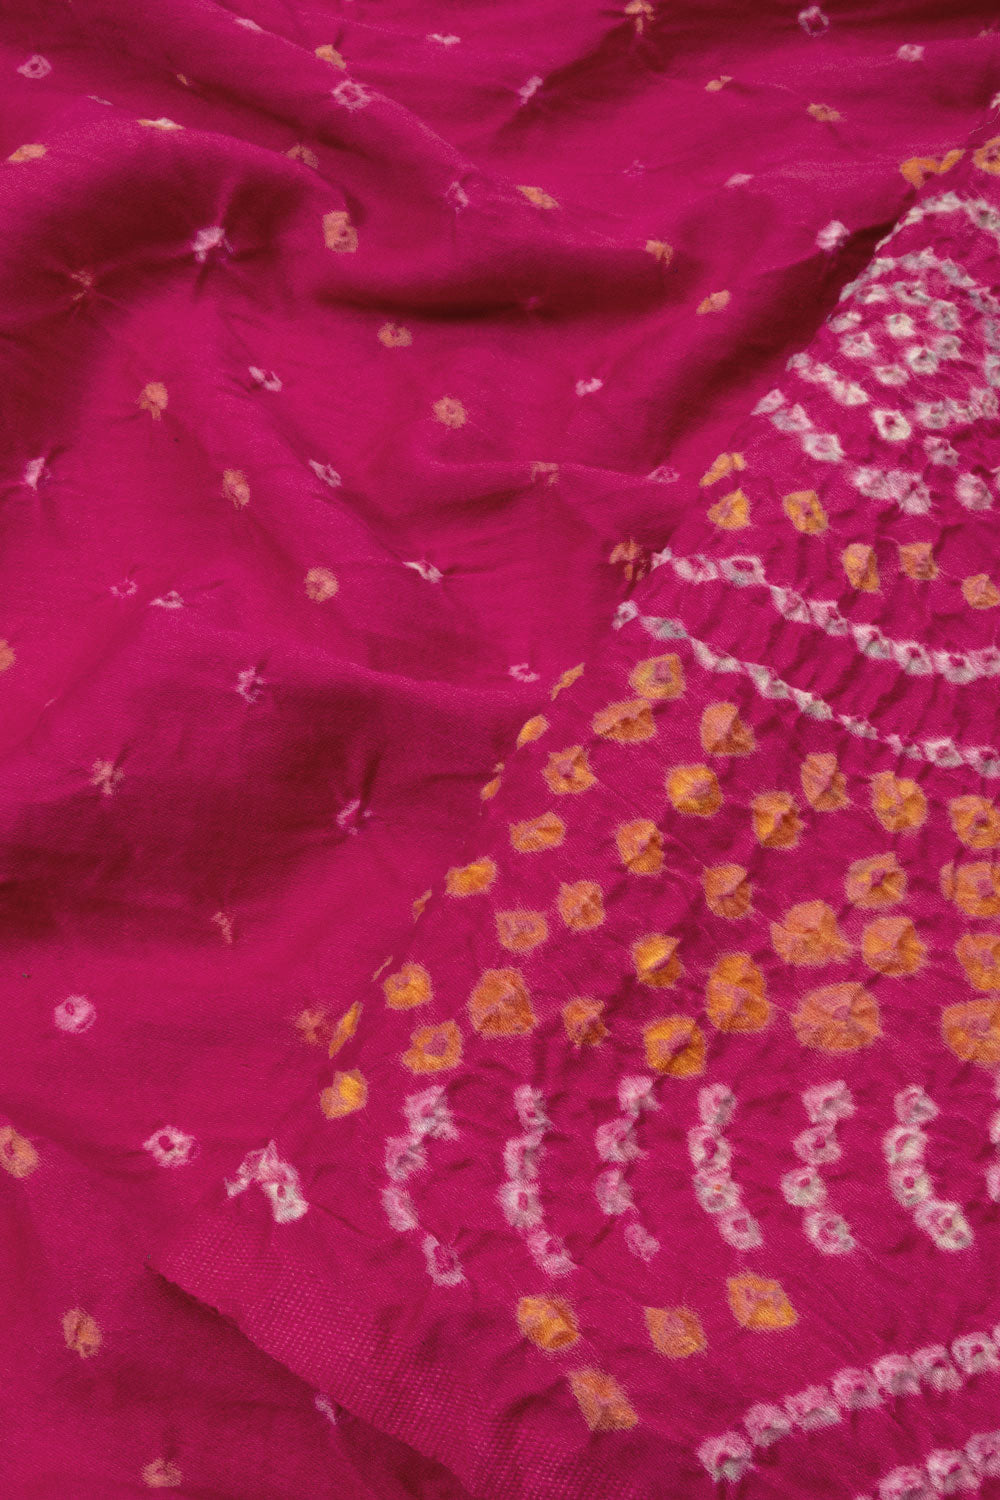 Rani Pink Handcrafted Bandhani Cotton Saree - Avishya